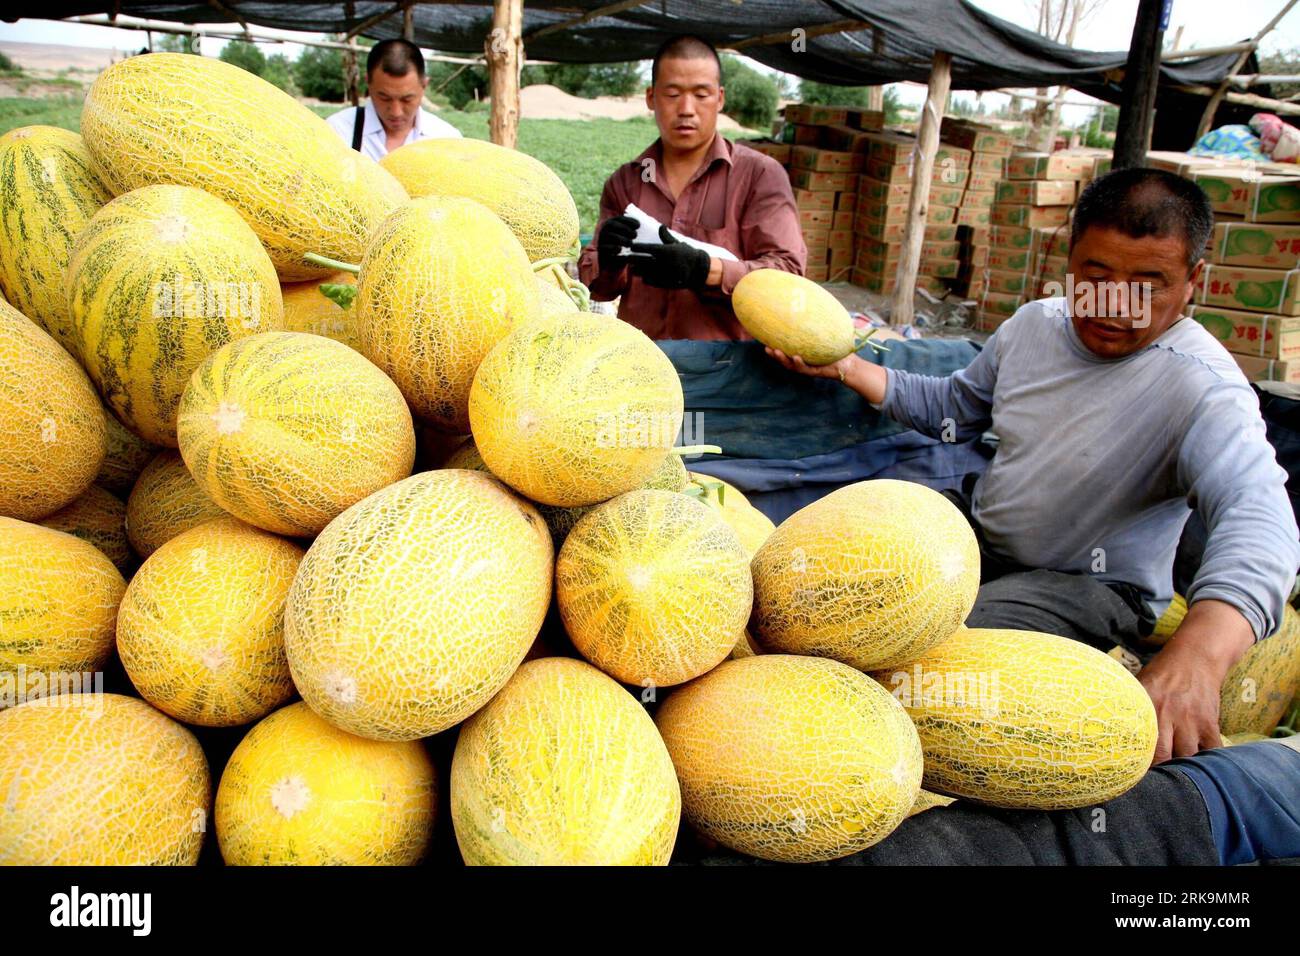 Bildnummer: 54212999  Datum: 06.07.2010  Copyright: imago/Xinhua (100707) -- HAMI, July 7, 2010 (Xinhua) -- Farmers harvest Hami melons, a popular cantaloupe in Xinjiang,at Nanhu Township in Hami, northwest China s Xinjiang Uygur Autonomous Region, July 6, 2010. . (Xinhua/Cai Zengle) (wqq) (CN) PUBLICATIONxNOTxINxCHN Gesellschaft Wirtschaft Landwirtschaft Arbeitswelten Bauern Feldarbeit Ernte Land und Leute kbdig xdp 2010 quer o0 Melone Melonen Melonenernte    Bildnummer 54212999 Date 06 07 2010 Copyright Imago XINHUA  Hami July 7 2010 XINHUA Farmers Harvest Hami melons a Popular Cantaloupe in Stock Photo